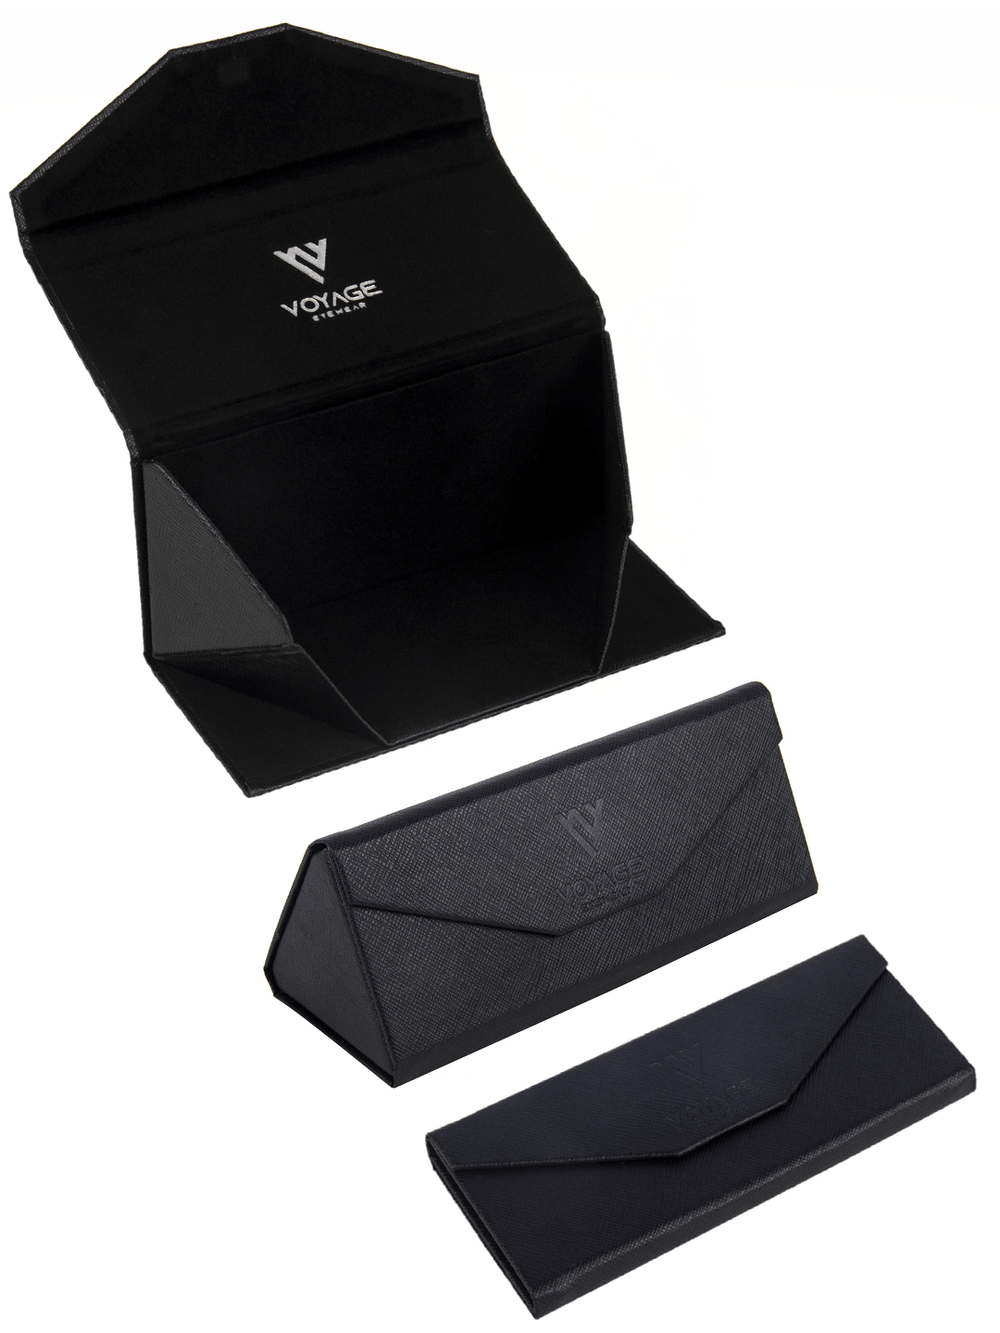 Voyage Exclusive Grey & Black Polarized Wayfarer Sunglasses for Men & Women - PMG4481